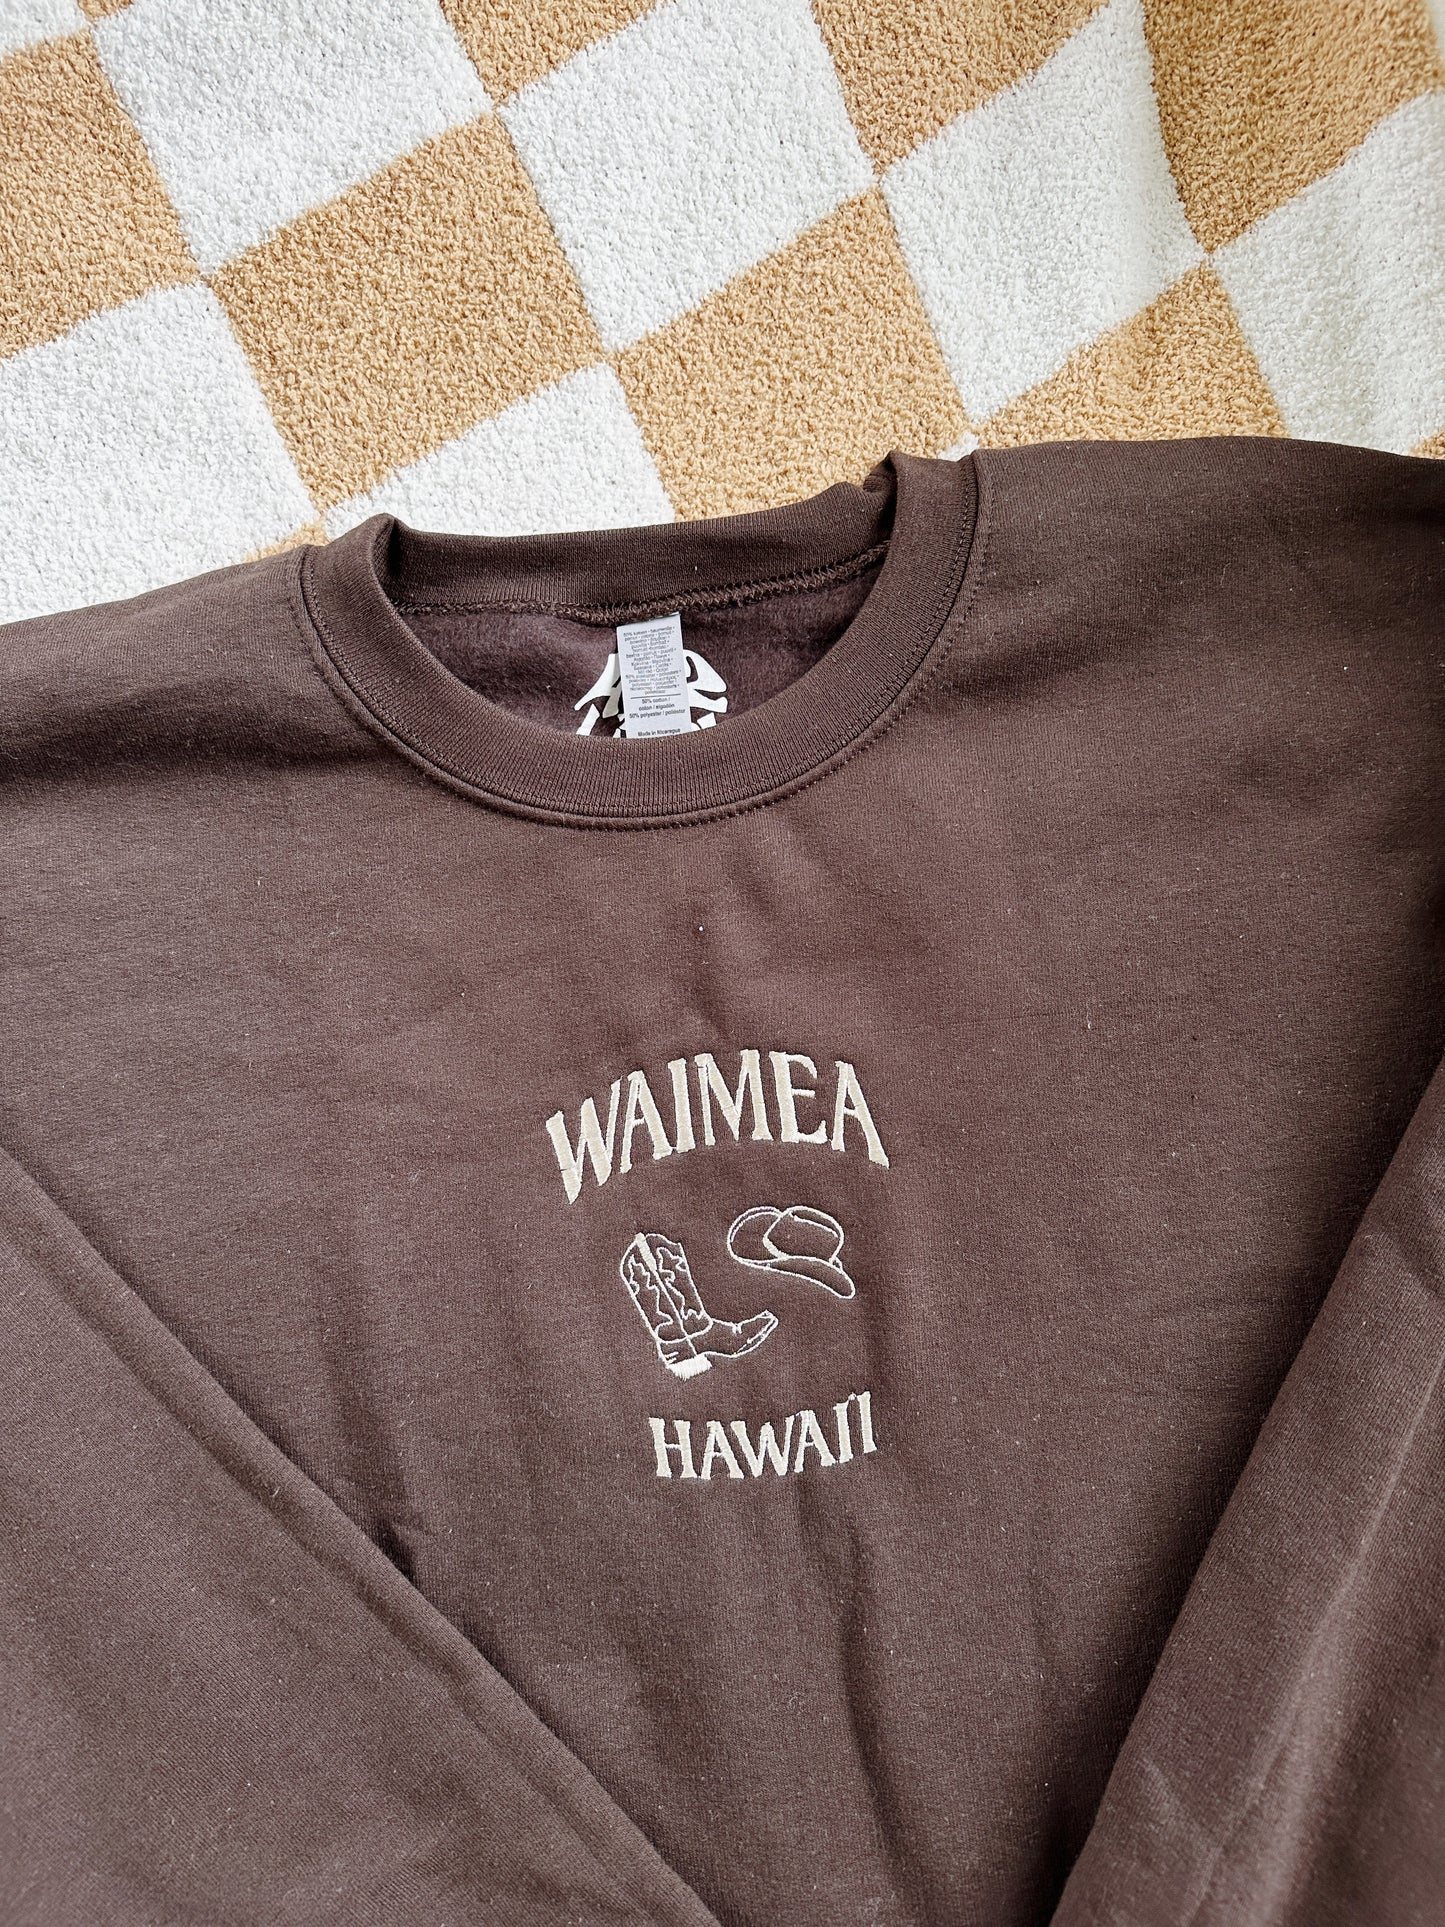 Waimea, Hawai'i - Embroidered Sweatshirt